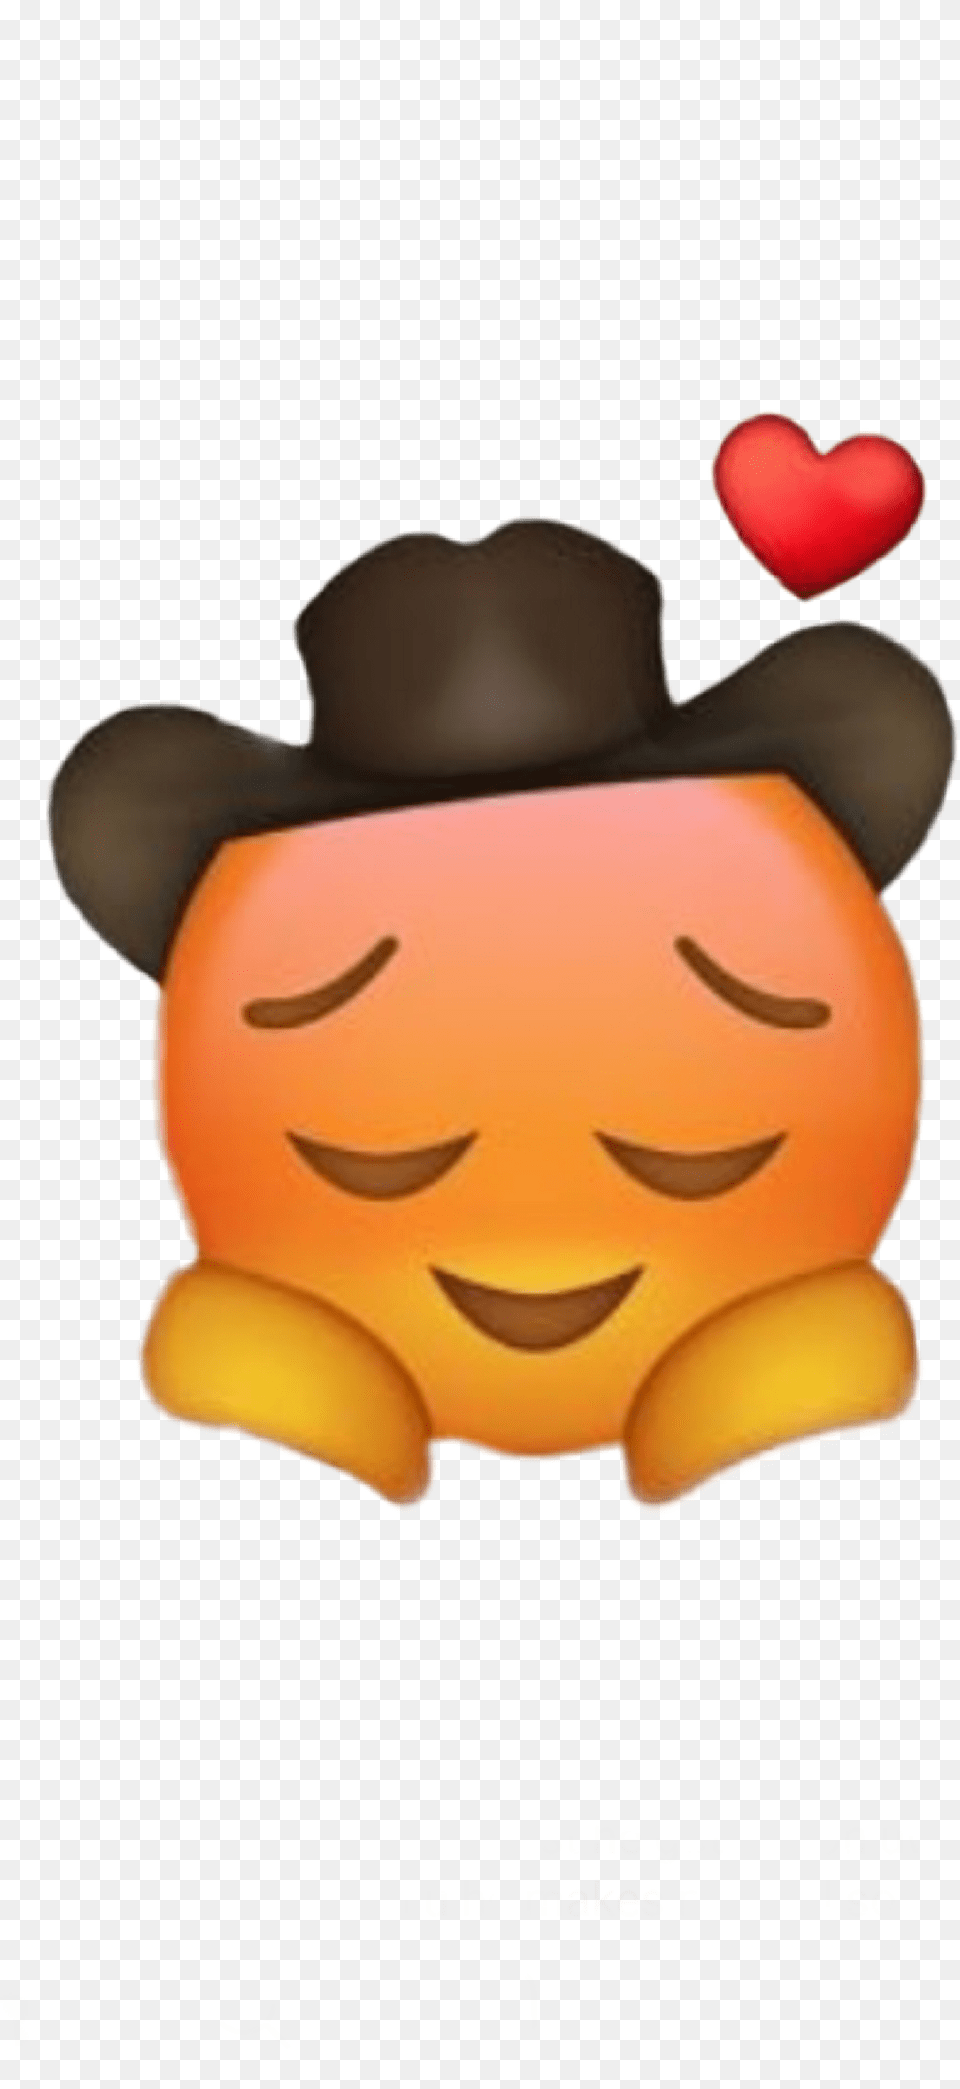 Emoji Cowboy Cowboyemoji Yeehaw Cowboy Emoji With Heart, Clothing, Hat, Toy, Carrot Free Png